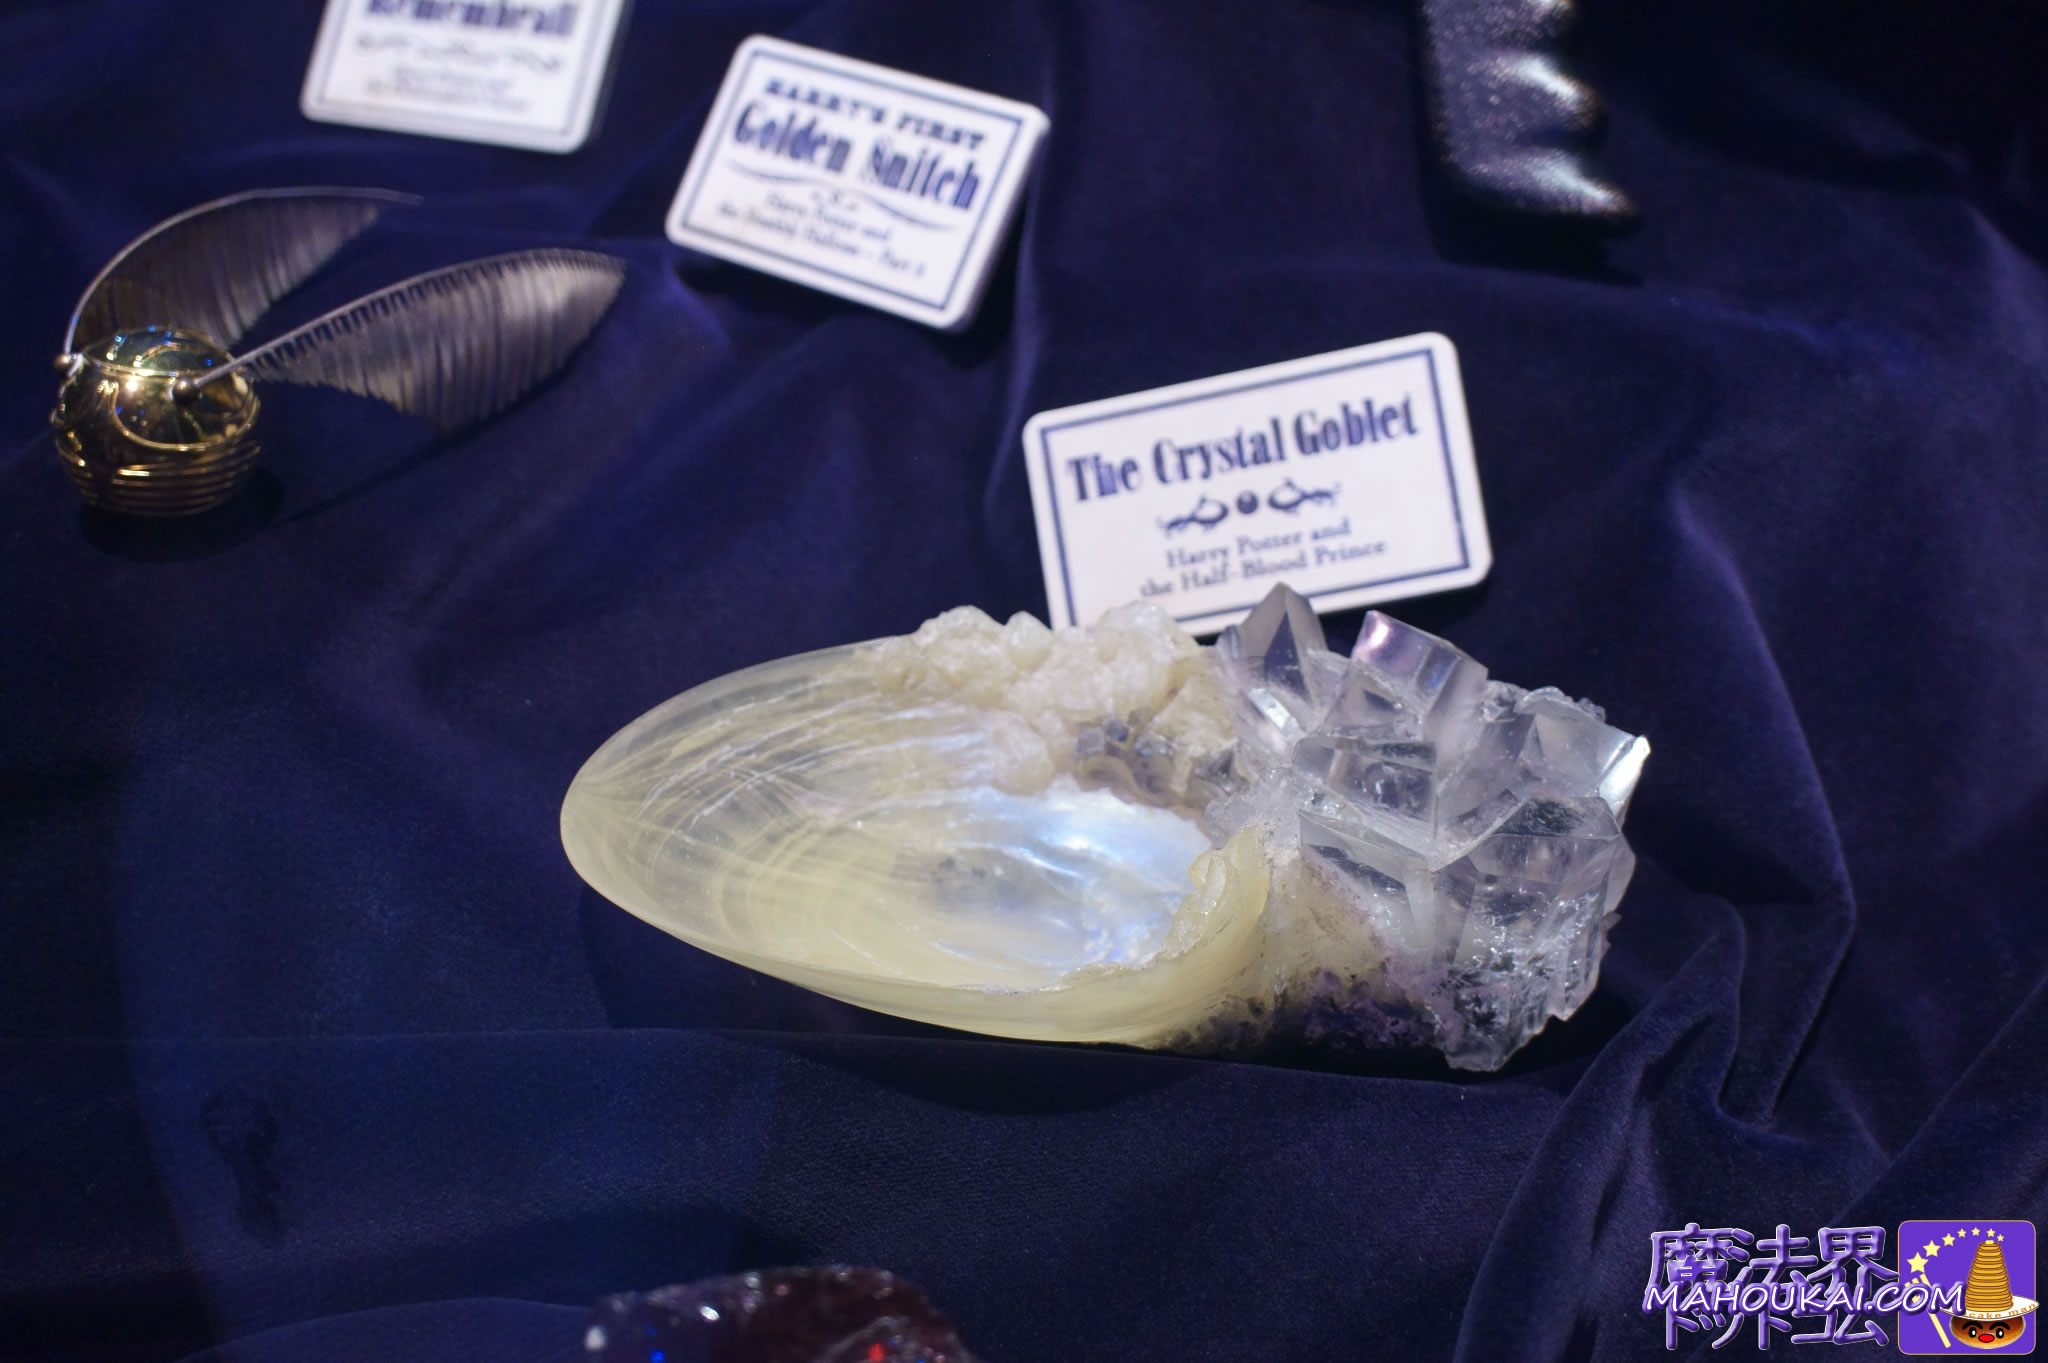 The Crystal Goblet Dumbledore's Crystal Goblet (real PROP) Harry Potter Studio Tour